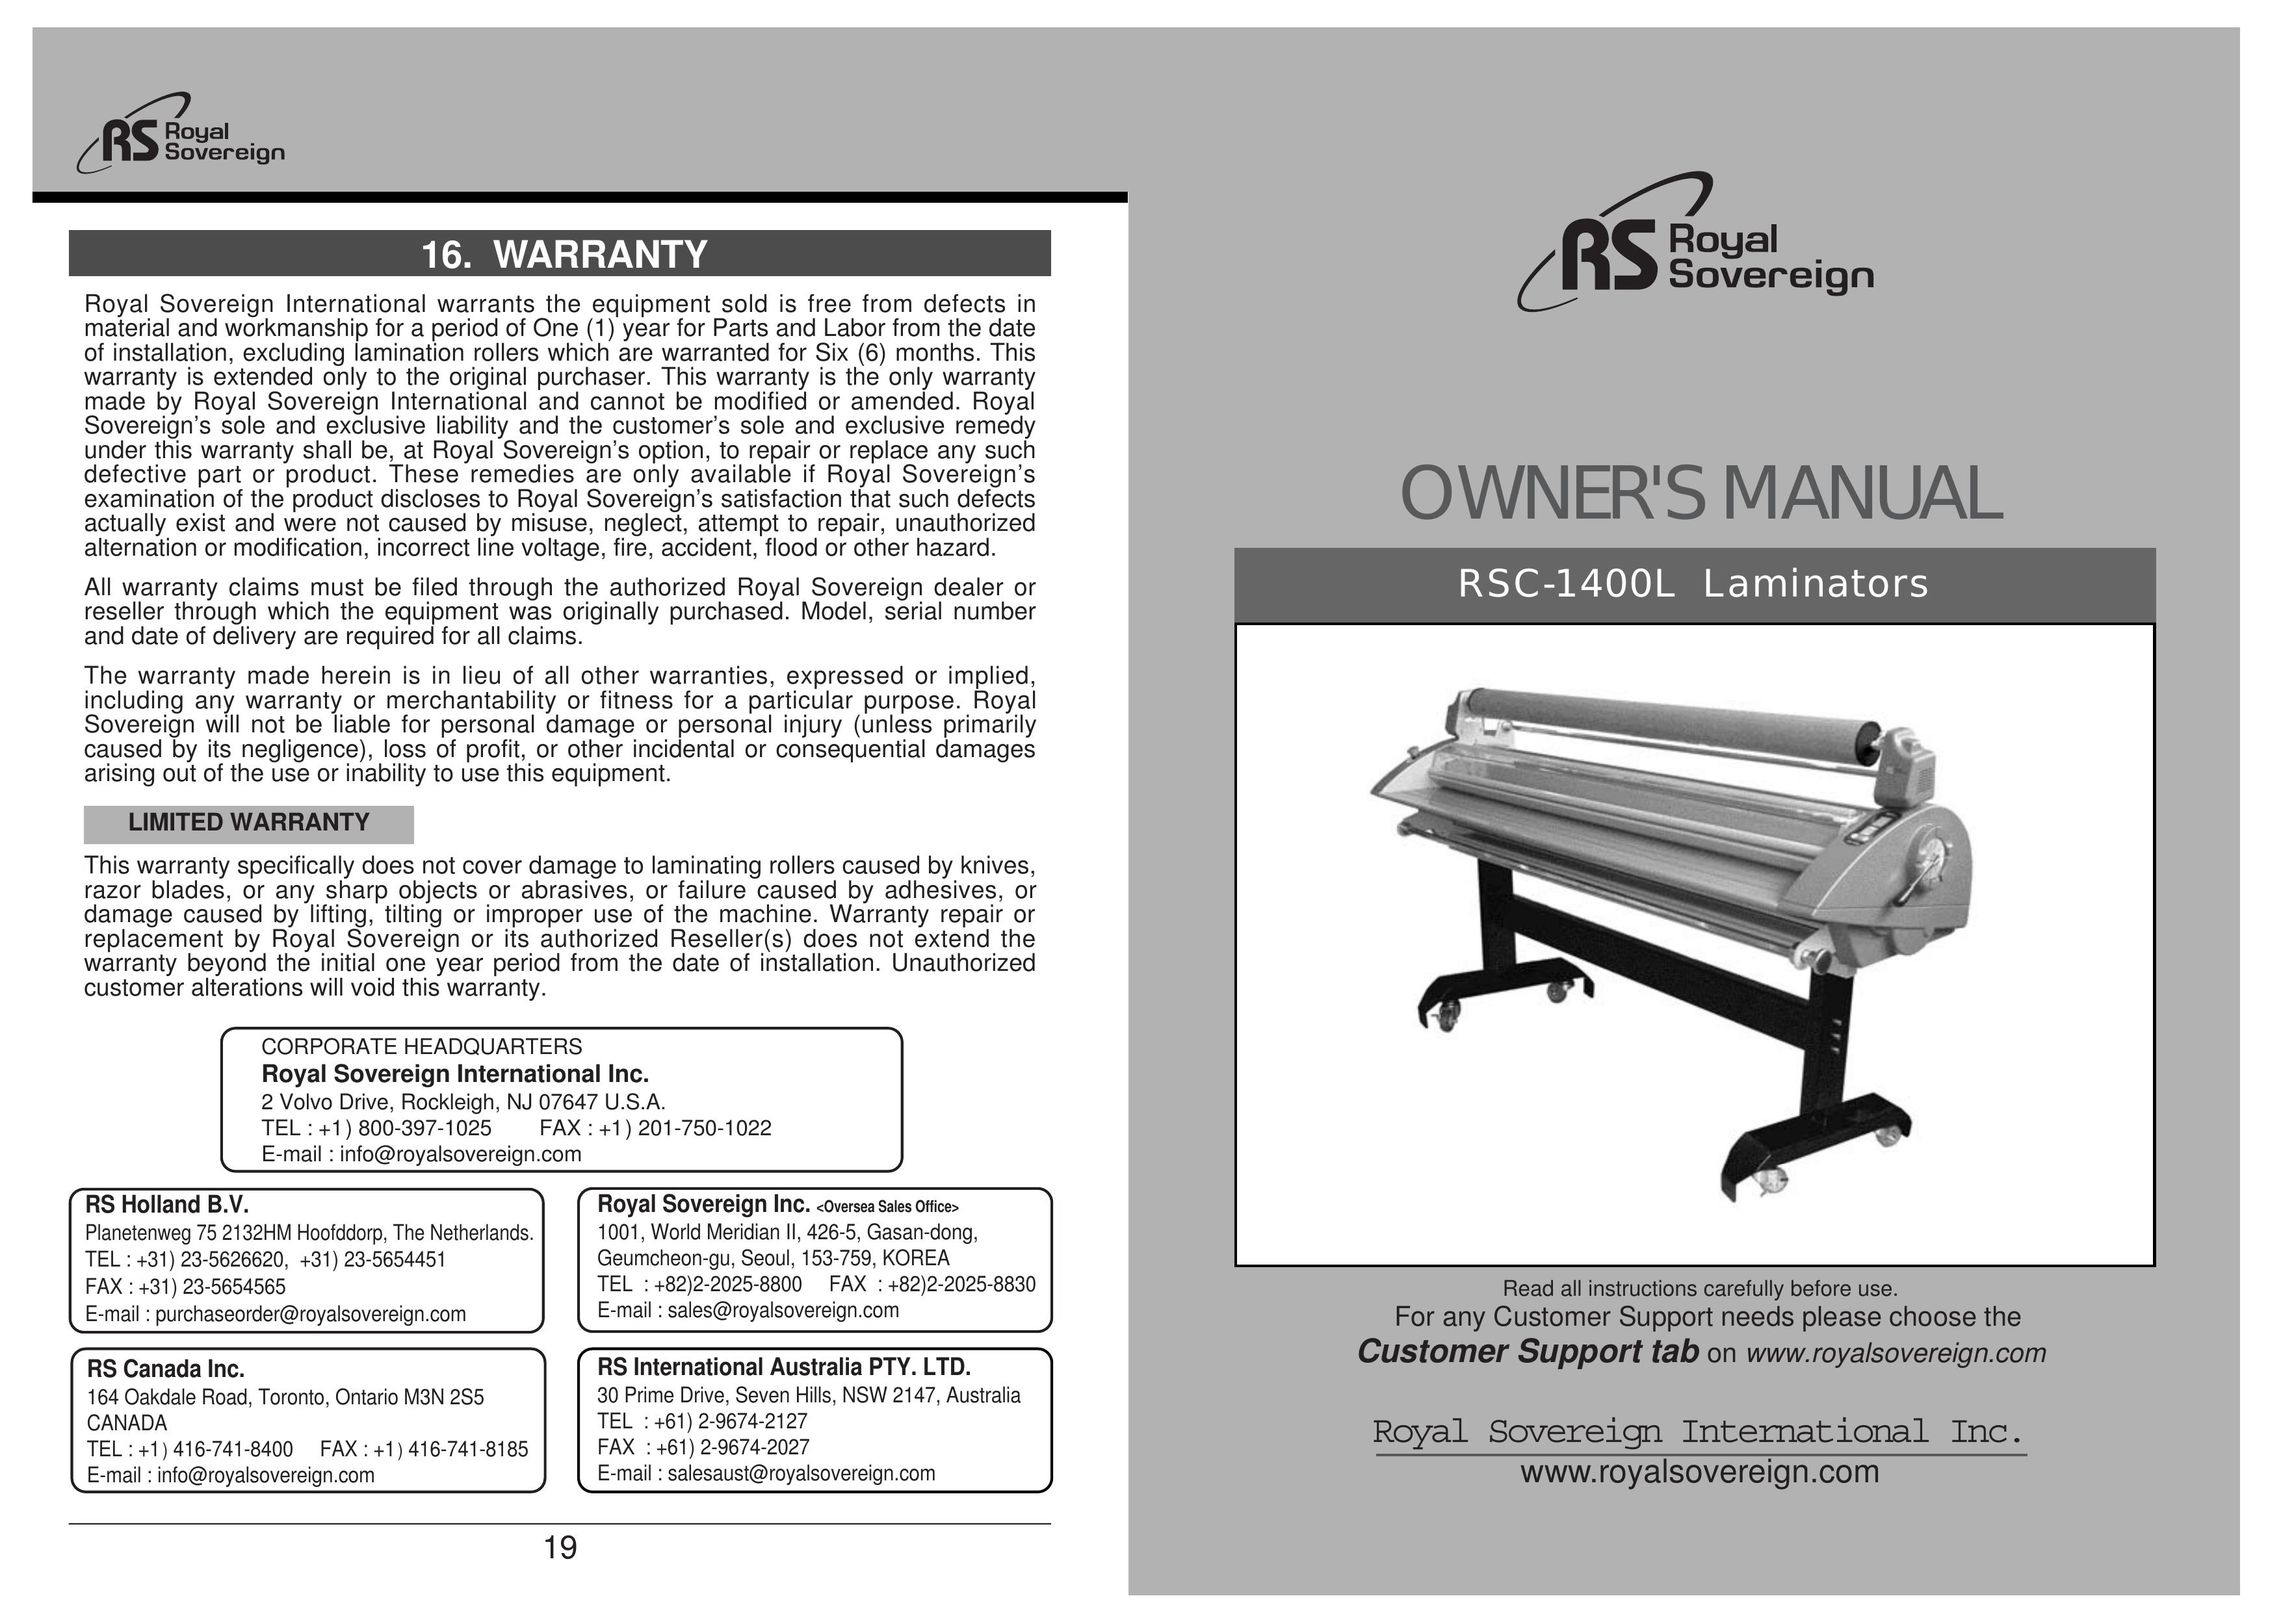 Royal Sovereign RSC-1400L Laminator User Manual